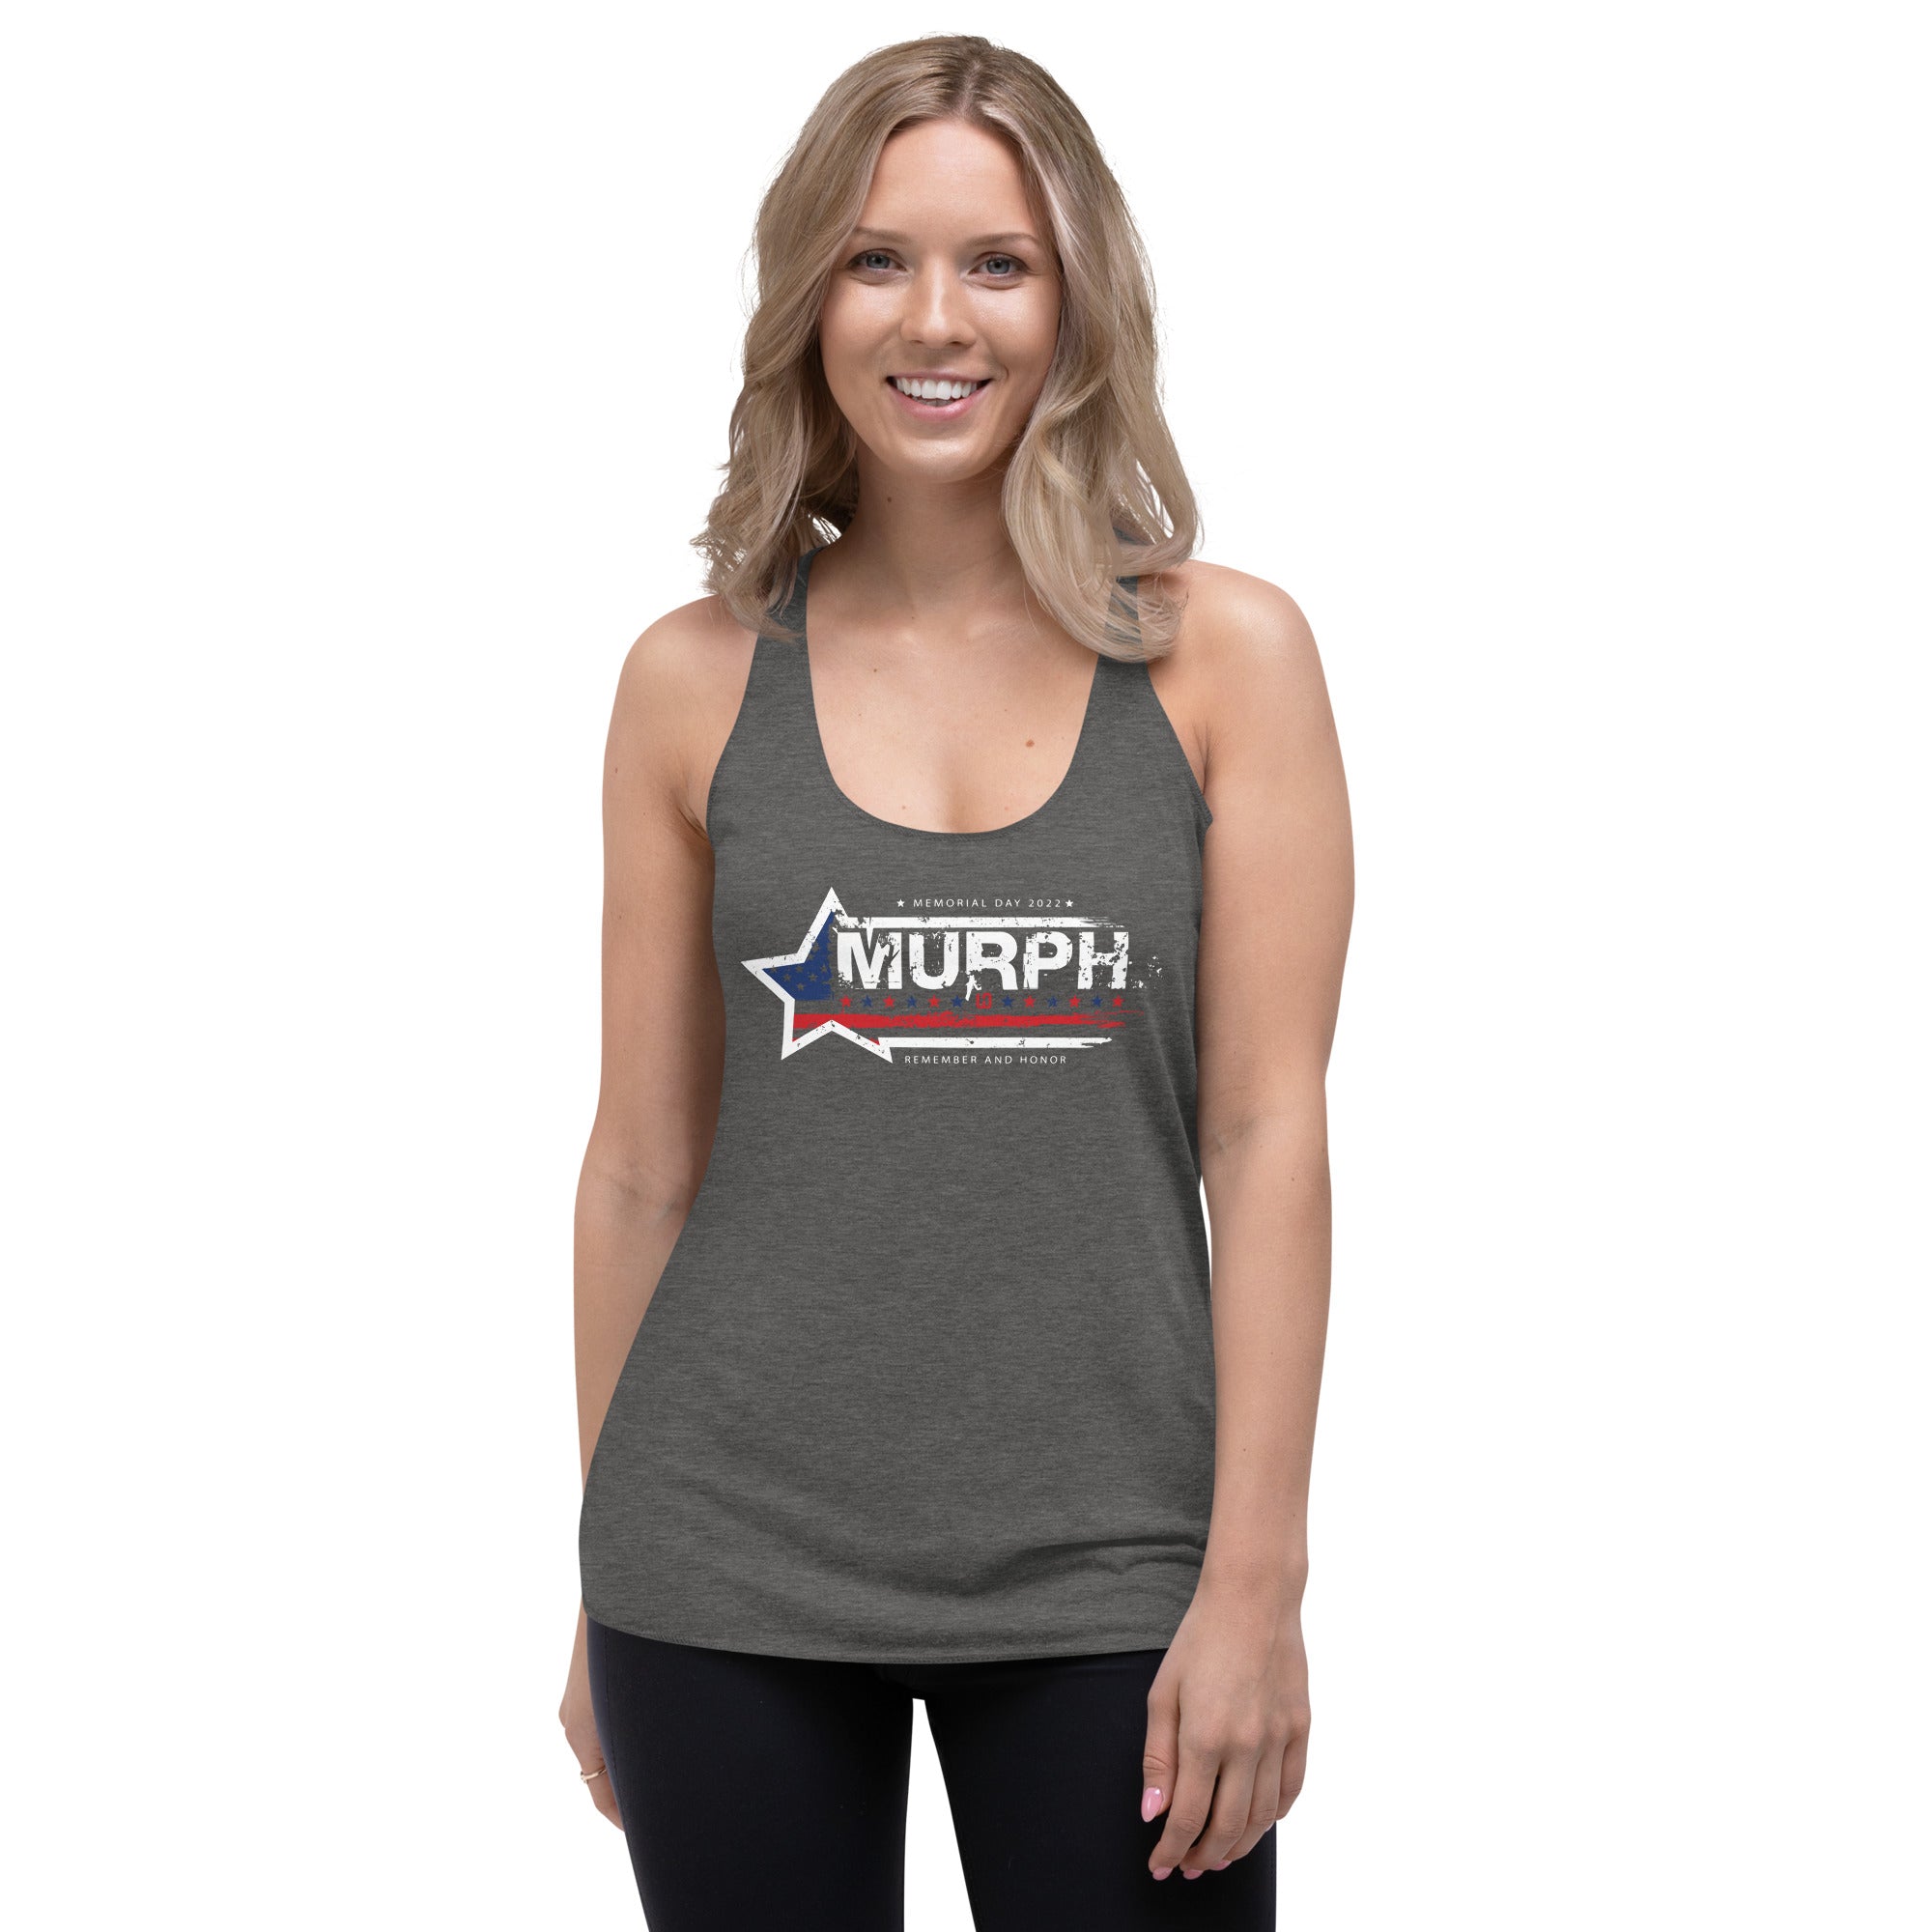 2022 WOD Obsessed Murph Women's Racerback Tank - wodobsessed.com Cross Functional Training Apparel 